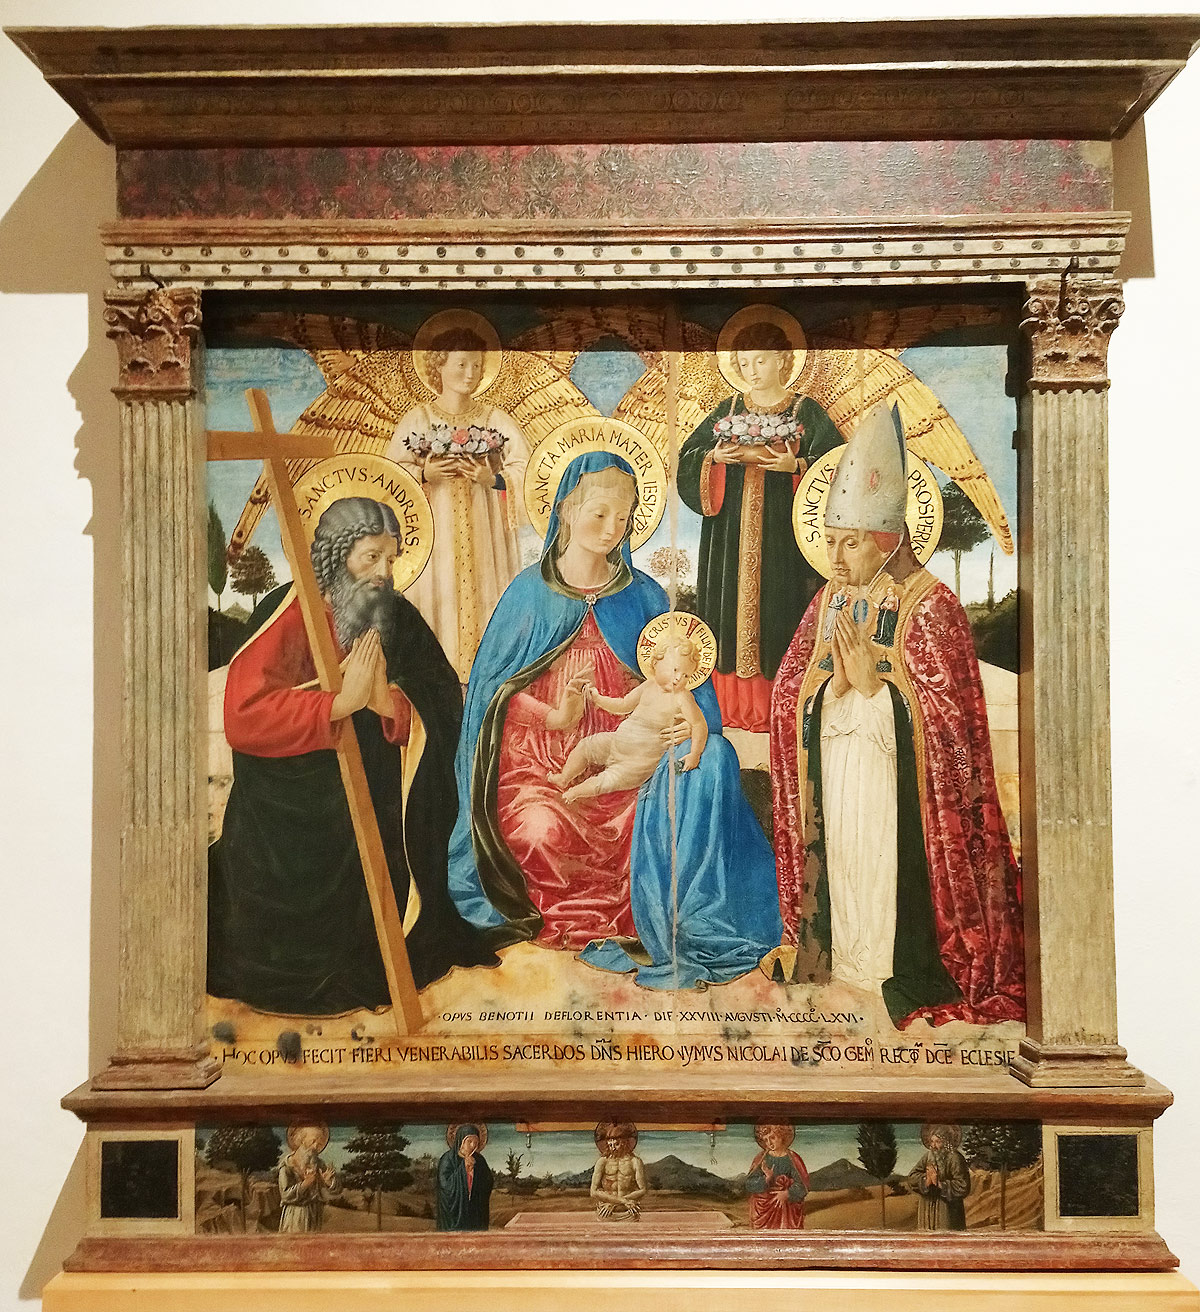 Benozzo Gozzoli, Madonna and Child with Saints Andrew and Prospero (1466; tempera on panel; San Gimignano, Musei Civici, Pinacoteca)